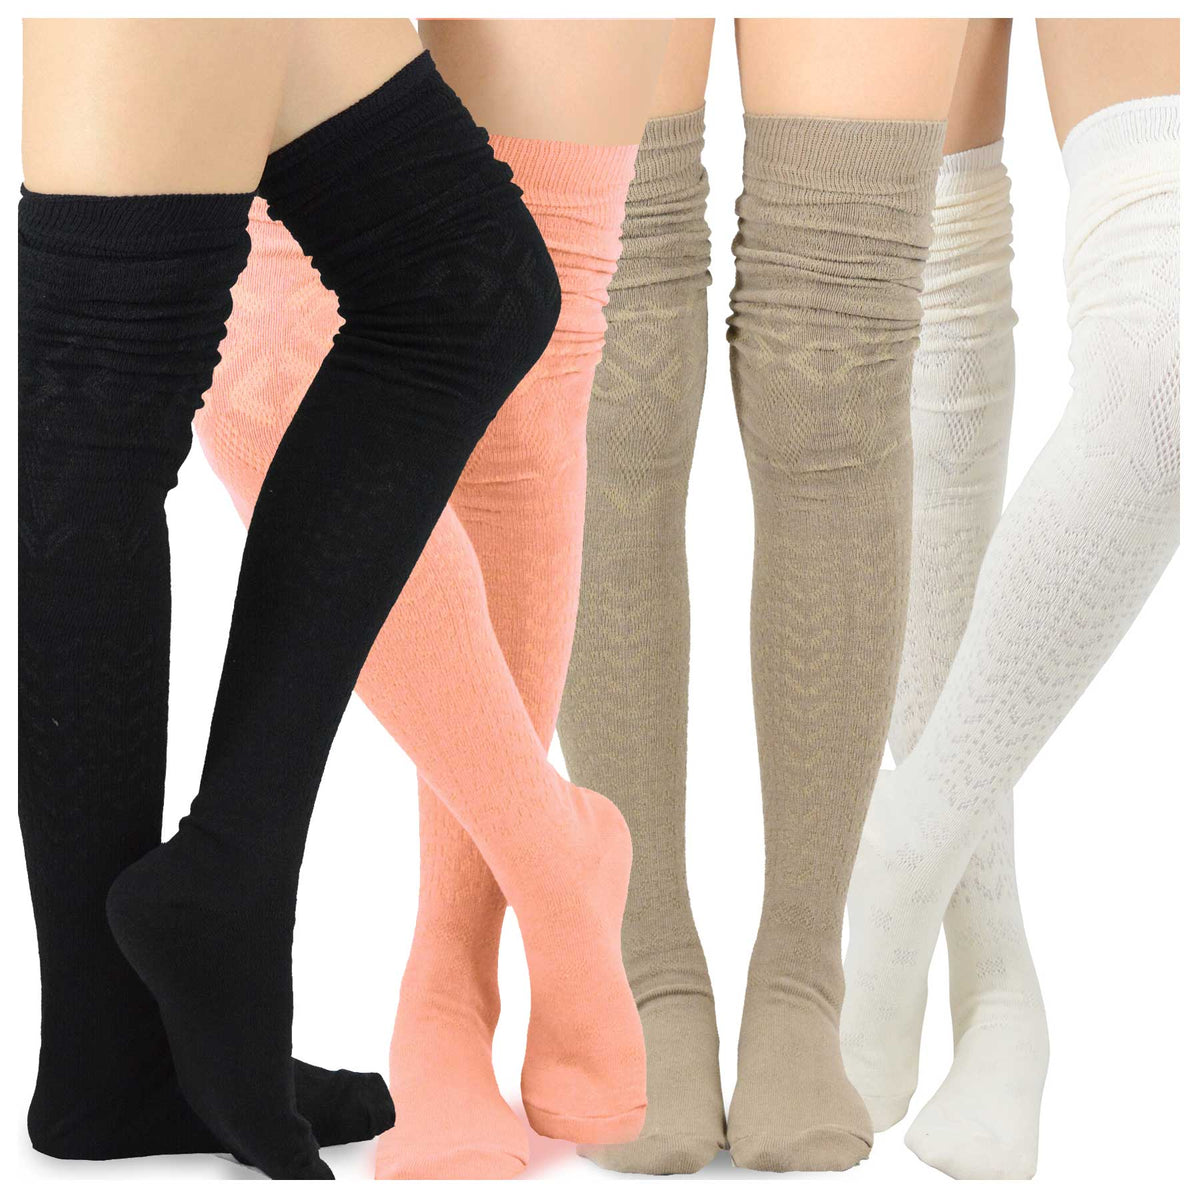 Nee High Socks Female Purge Outfit Womens Long Socks Bowknot Pure